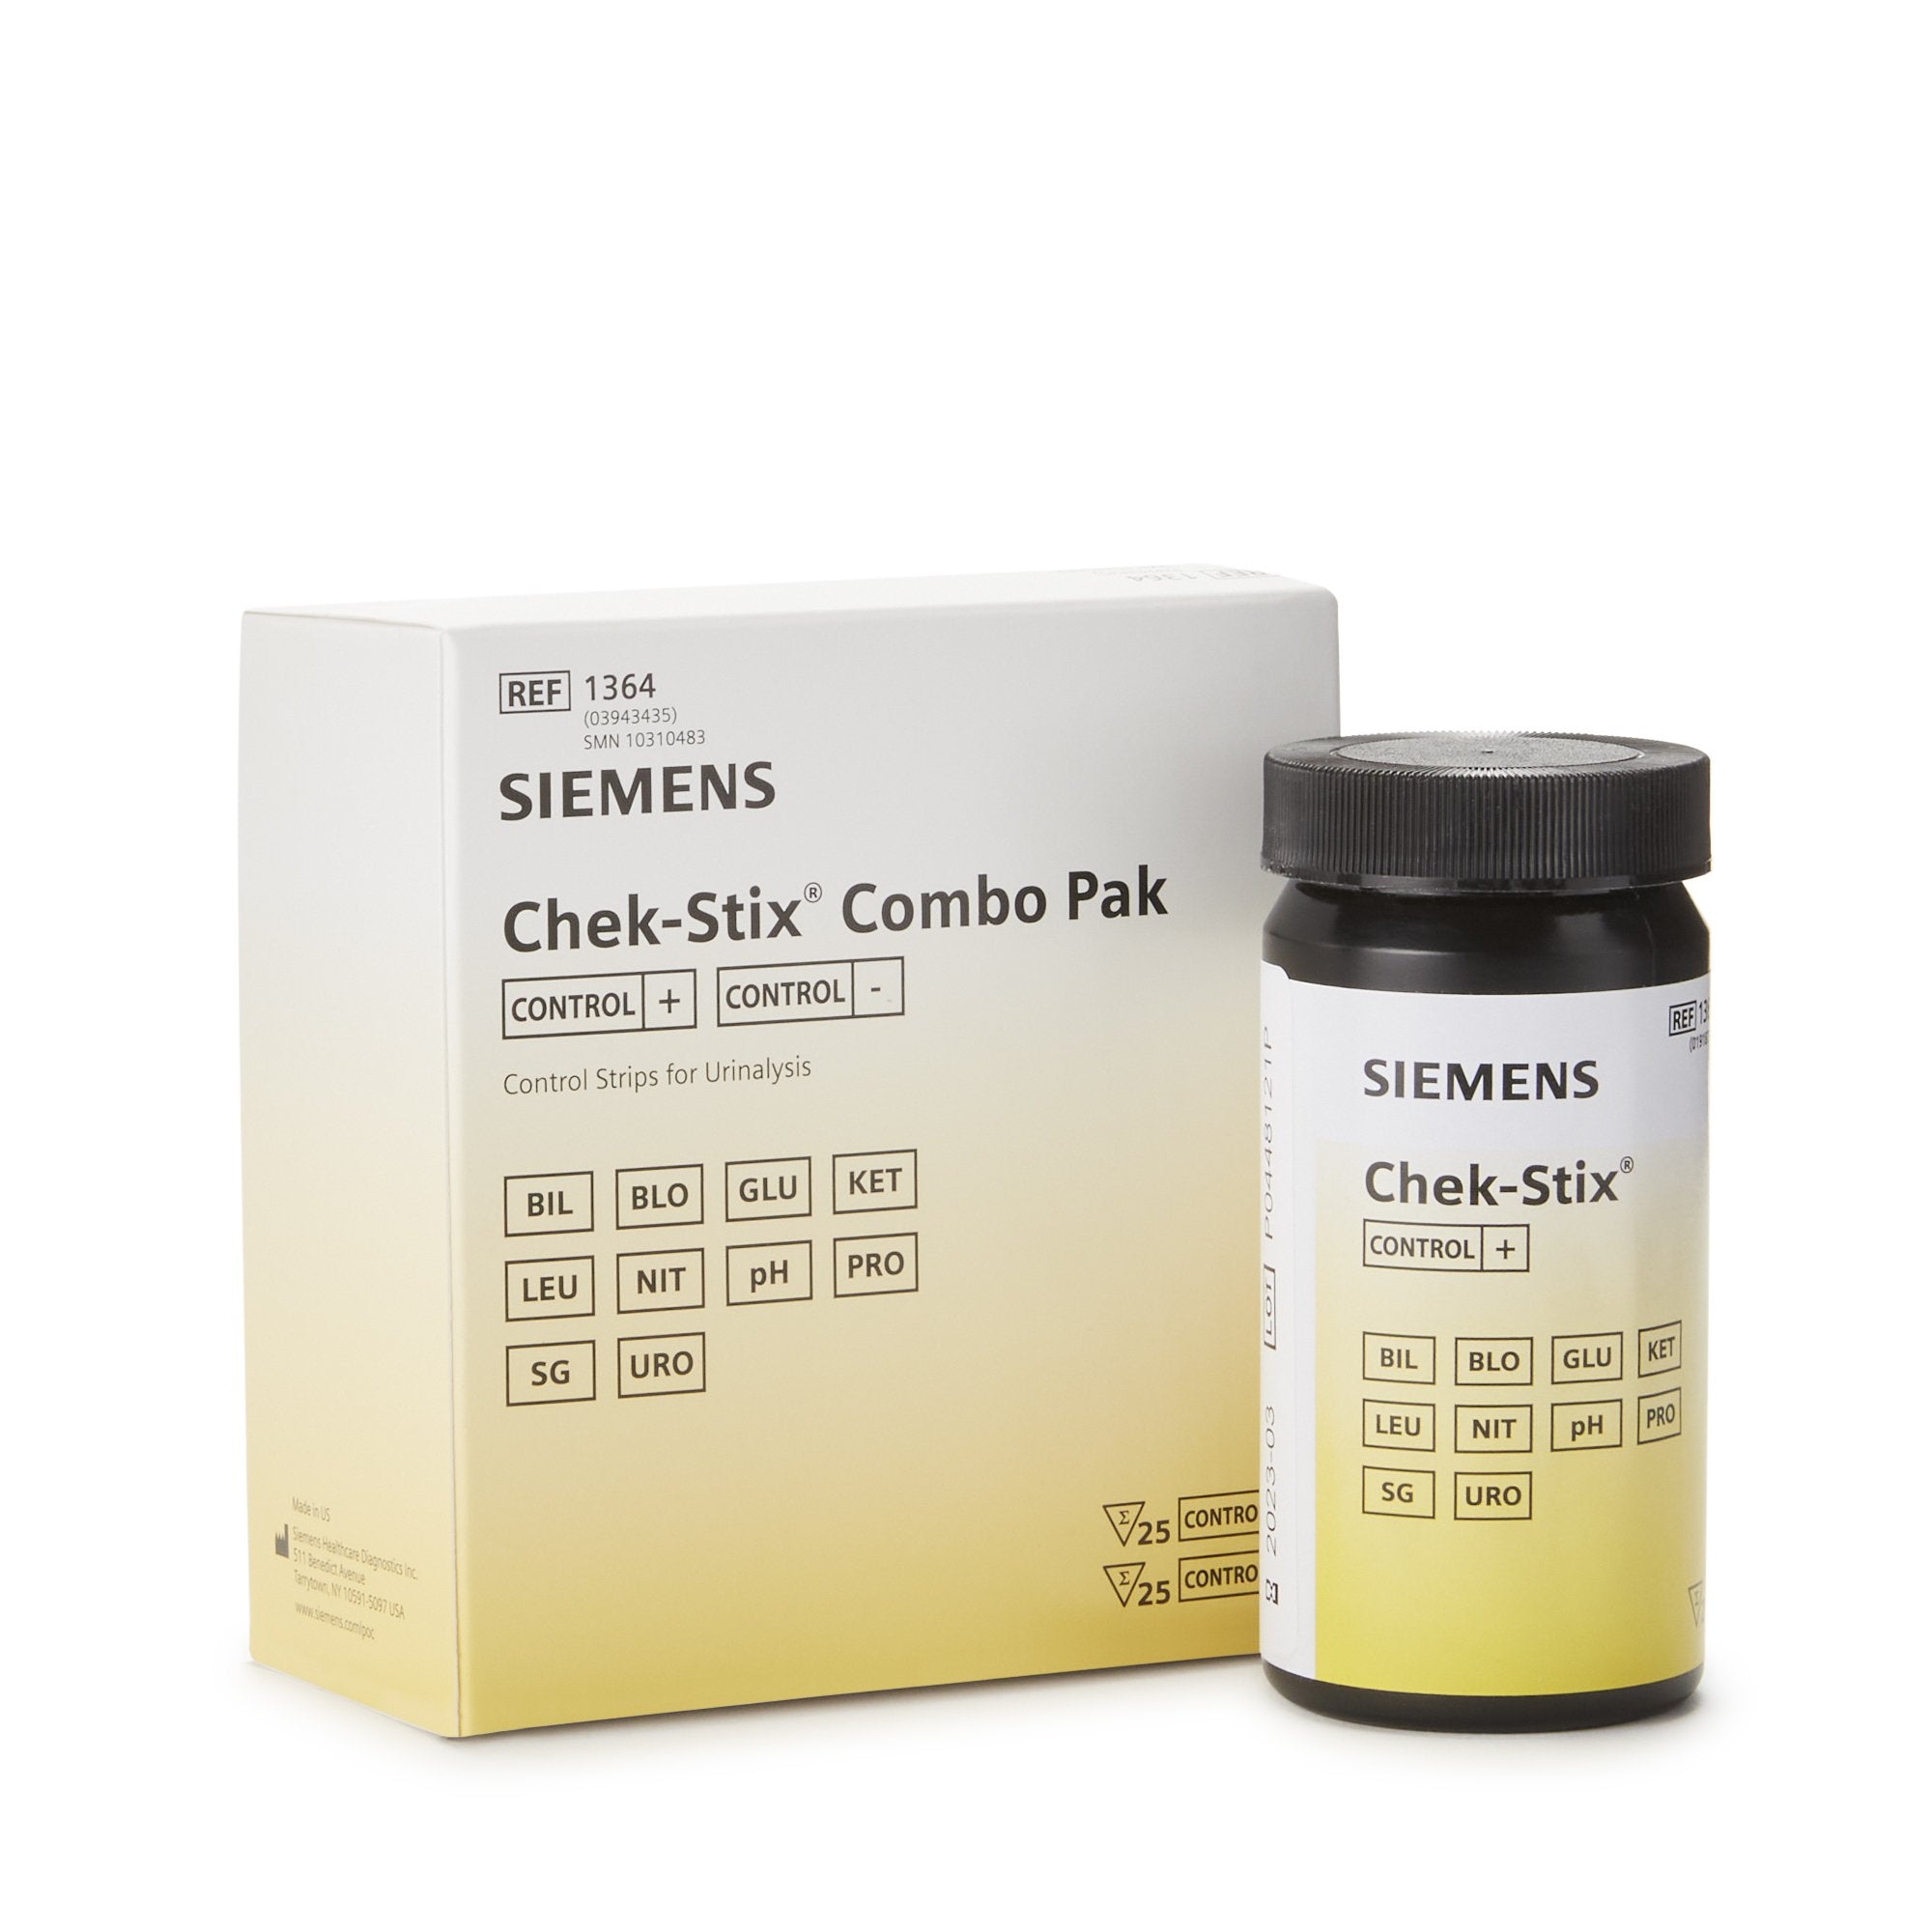 Urine Chemistry Control Chek-Stix Urine Dipstick Tests Positive Level / Negative Level 100 per Bottle